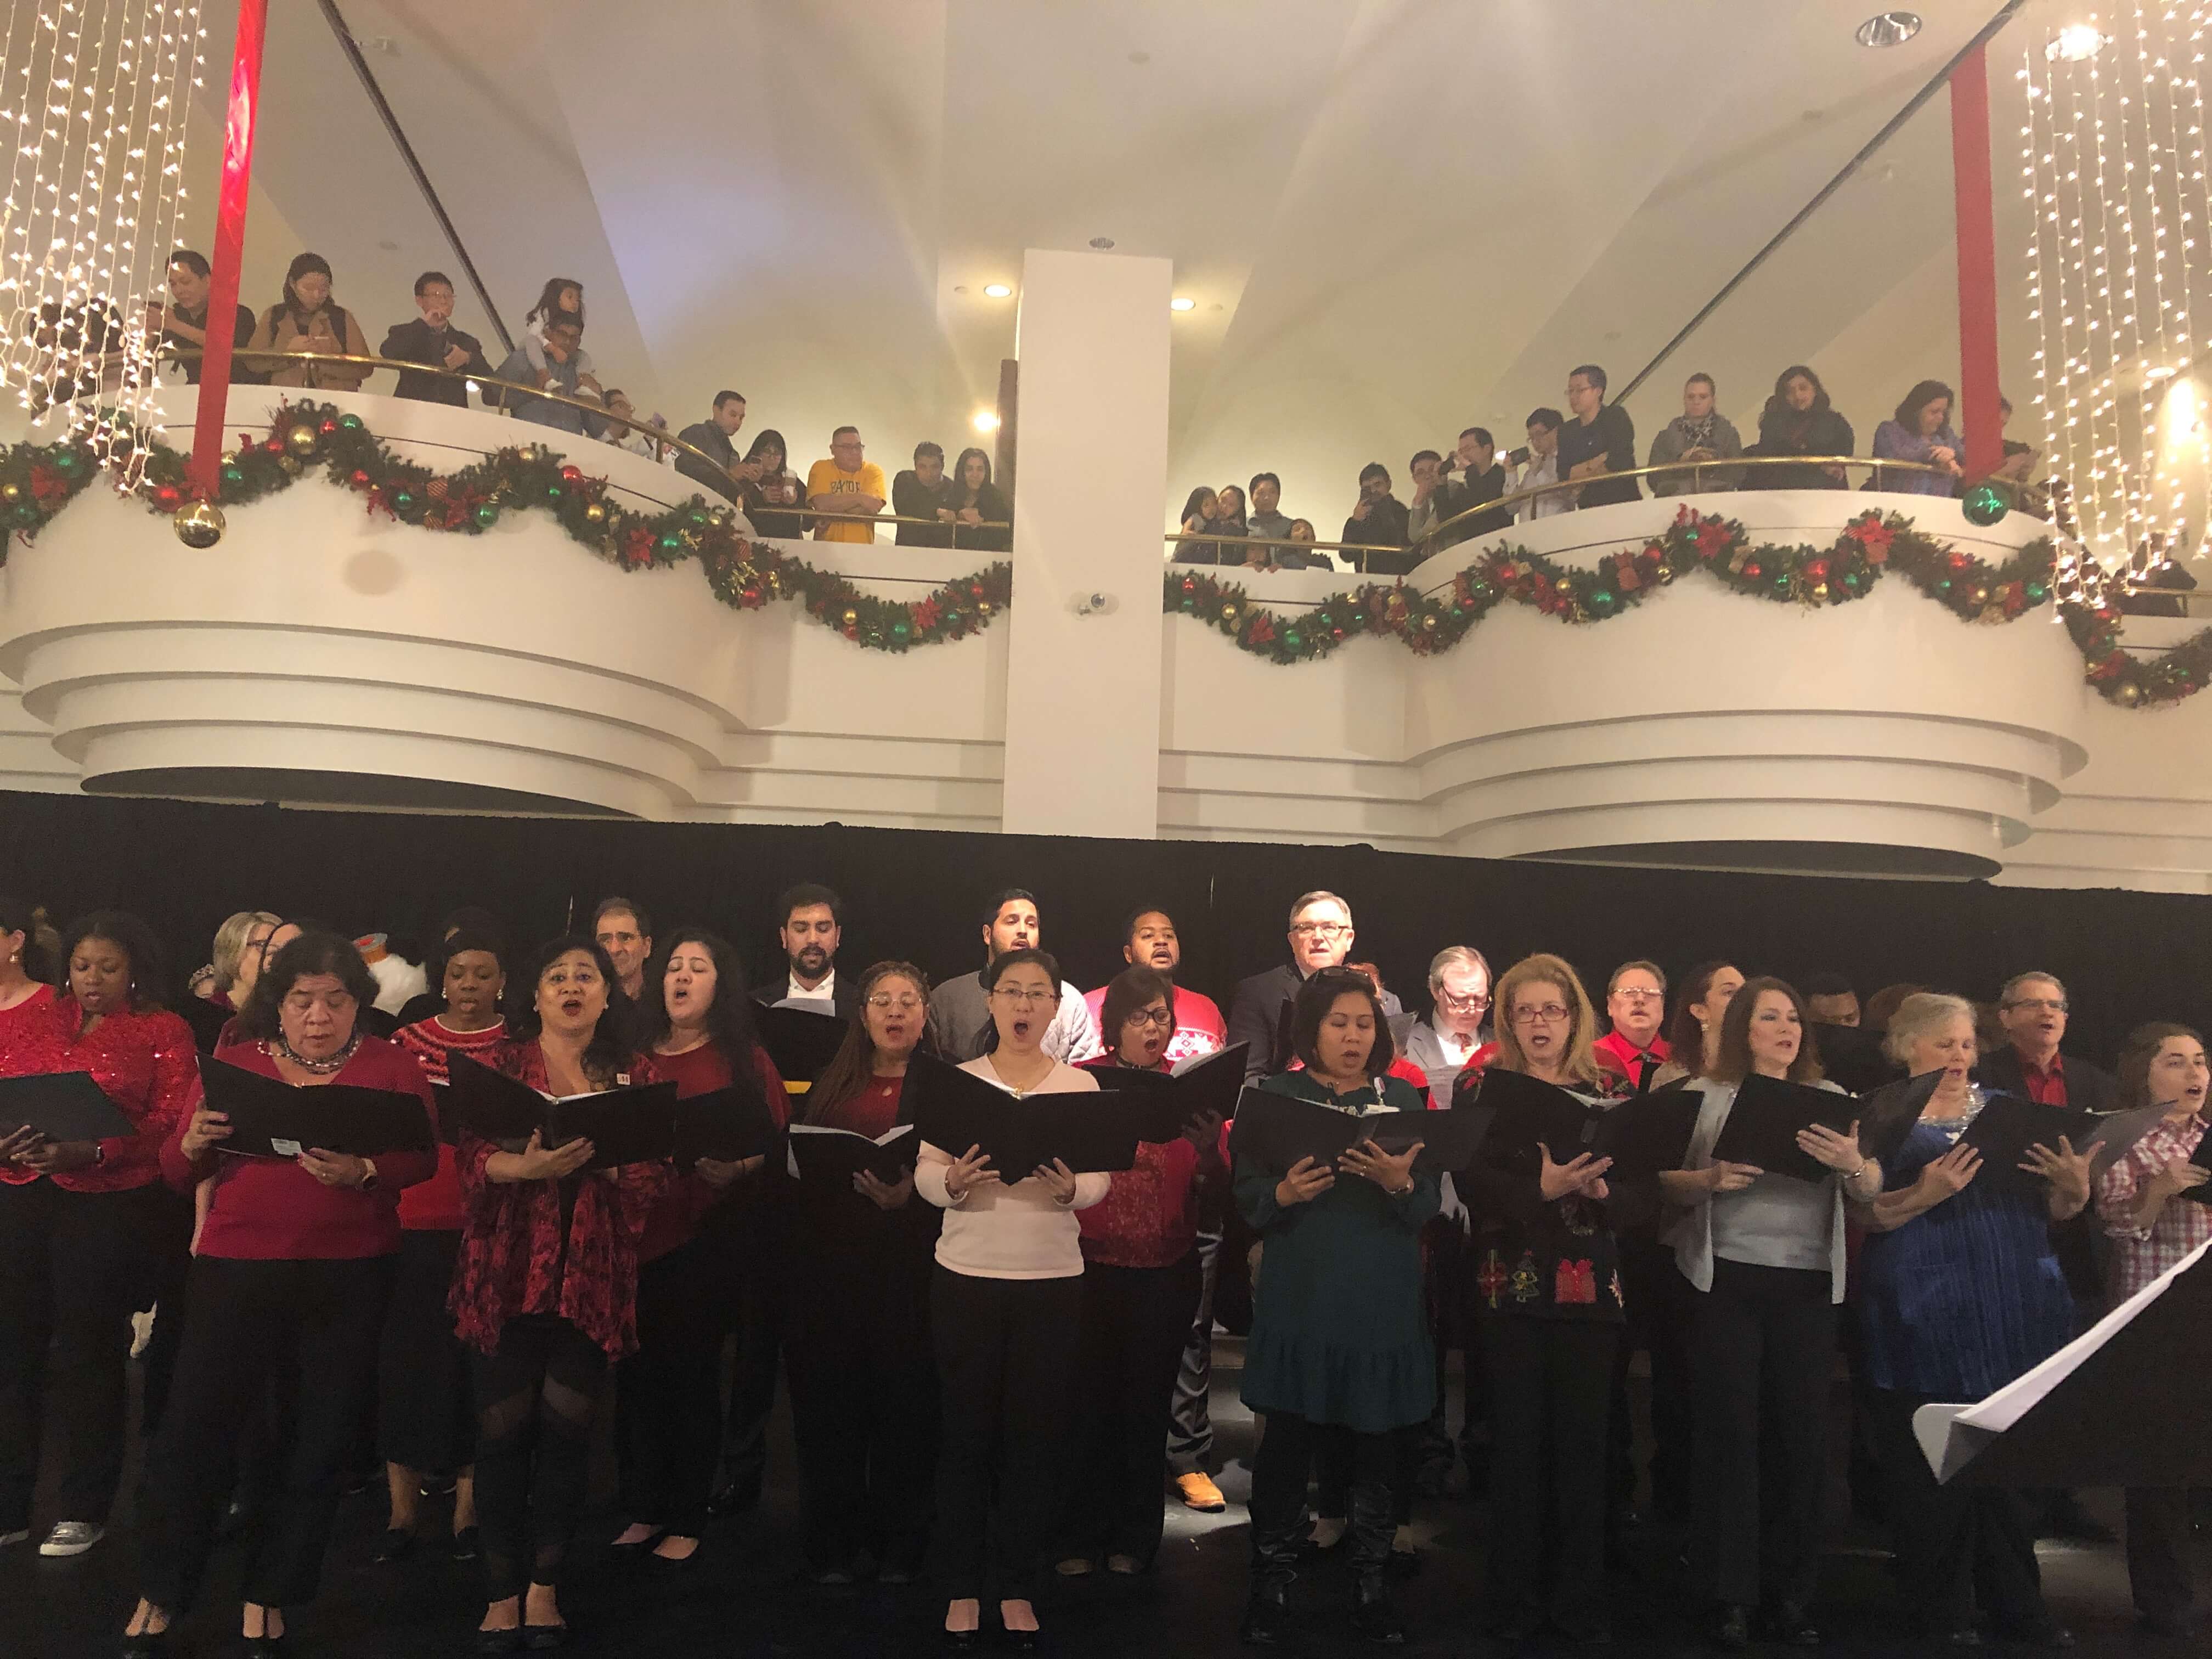 Members of the Houston Methodist Choir sing Christmas carols.